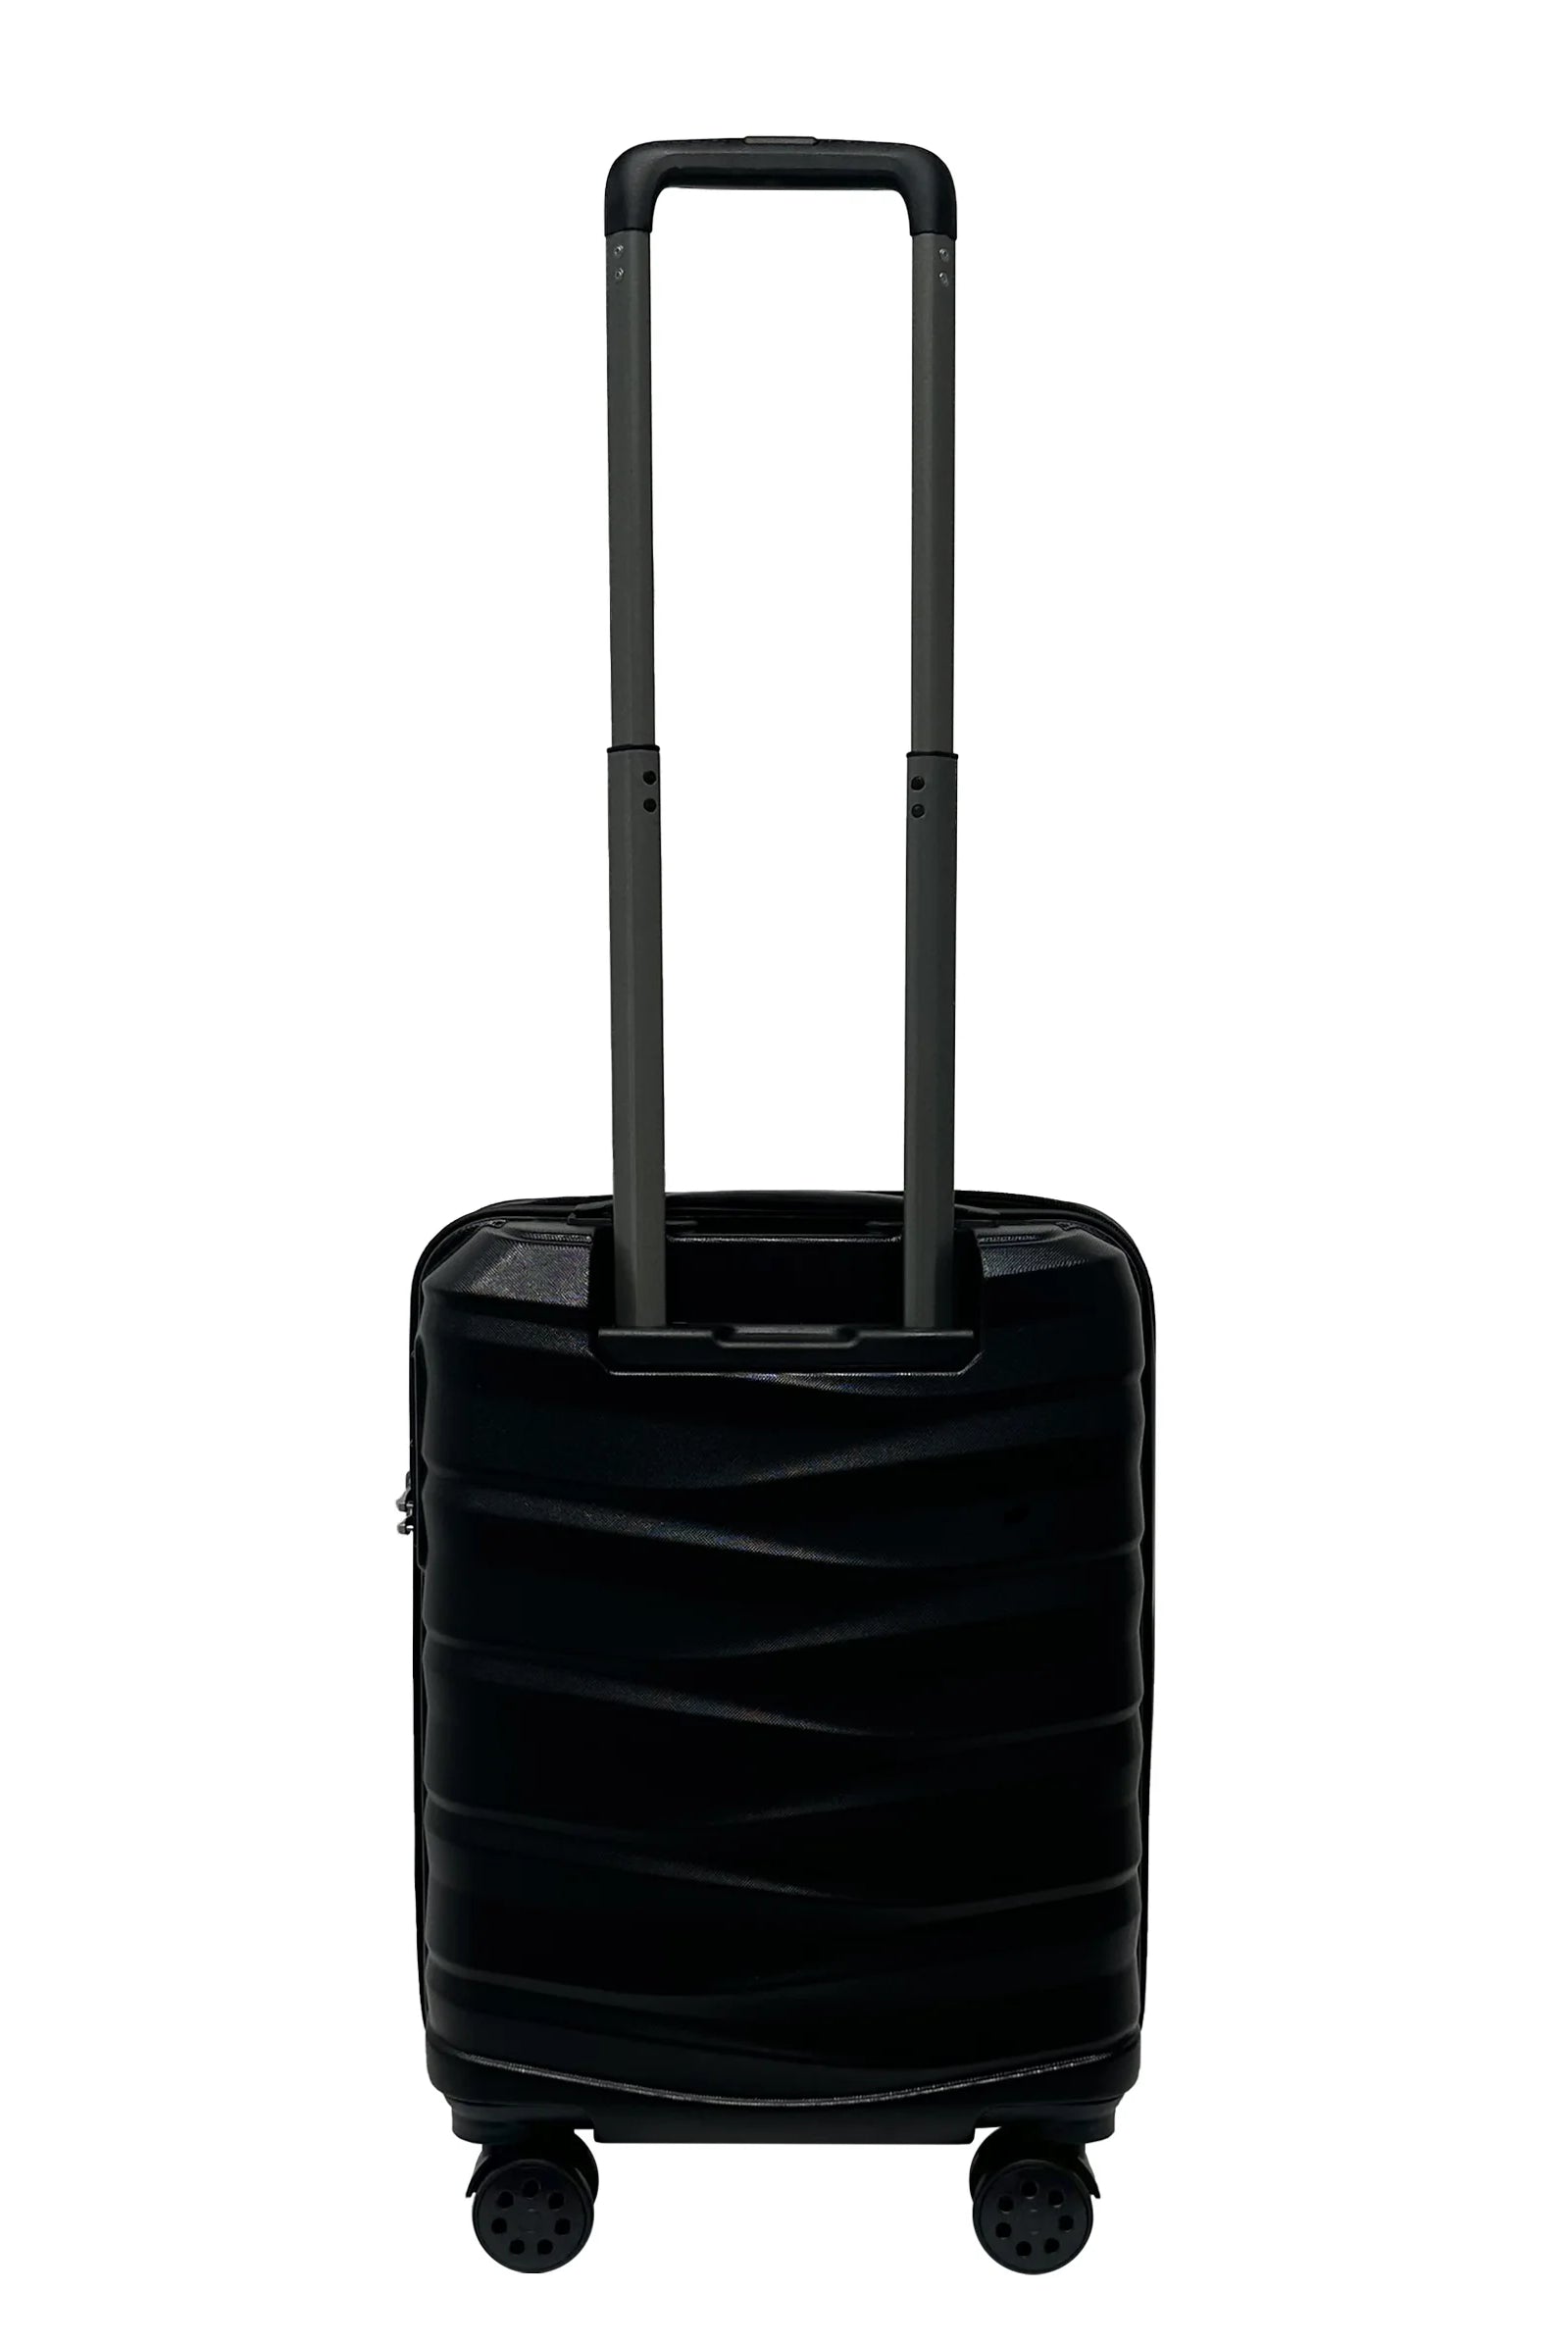 Black cabin luggage